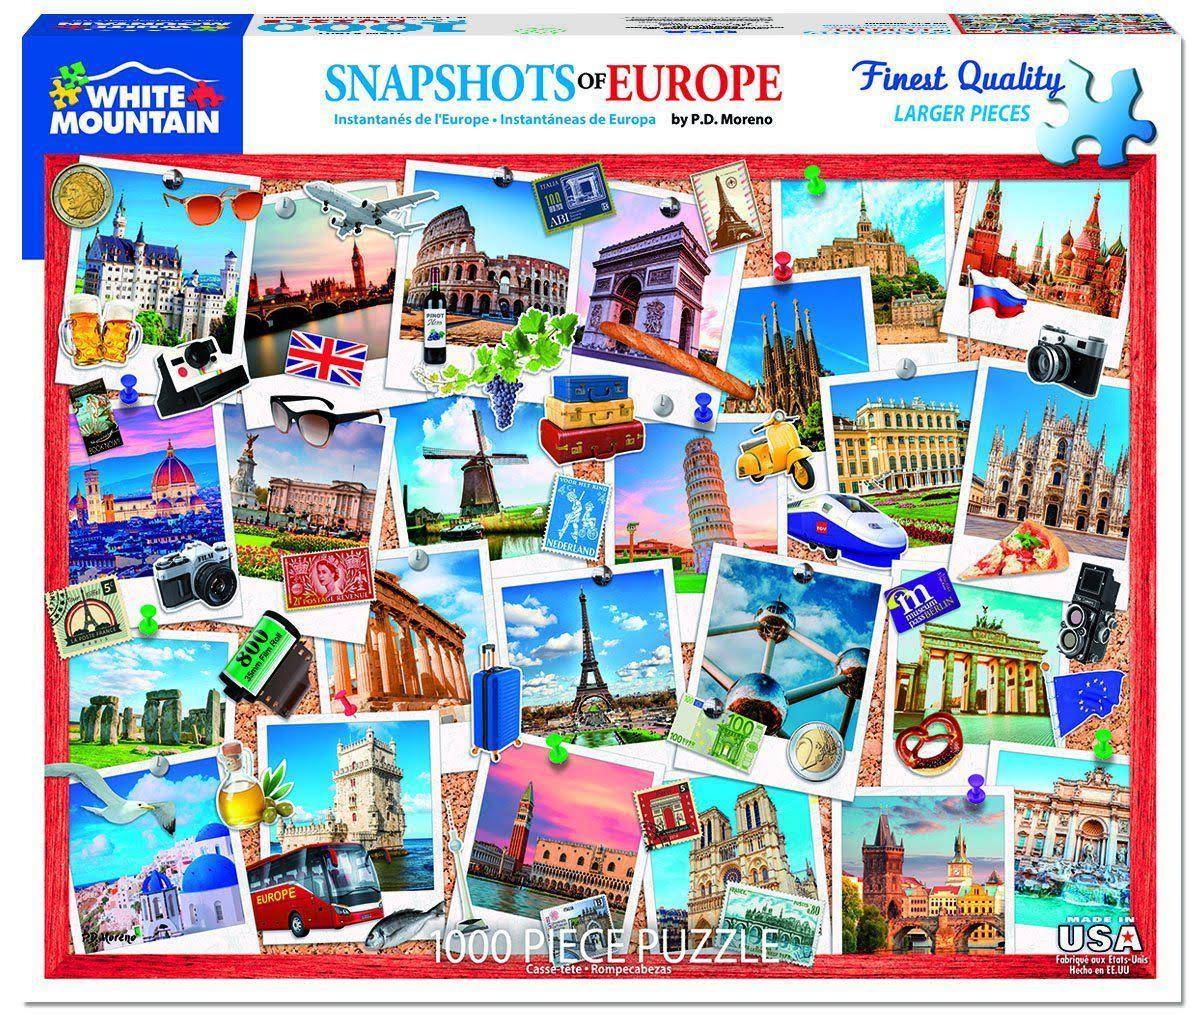 White Mountain : Snapshots of Europe - 1000 Piece Jigsaw Puzzle